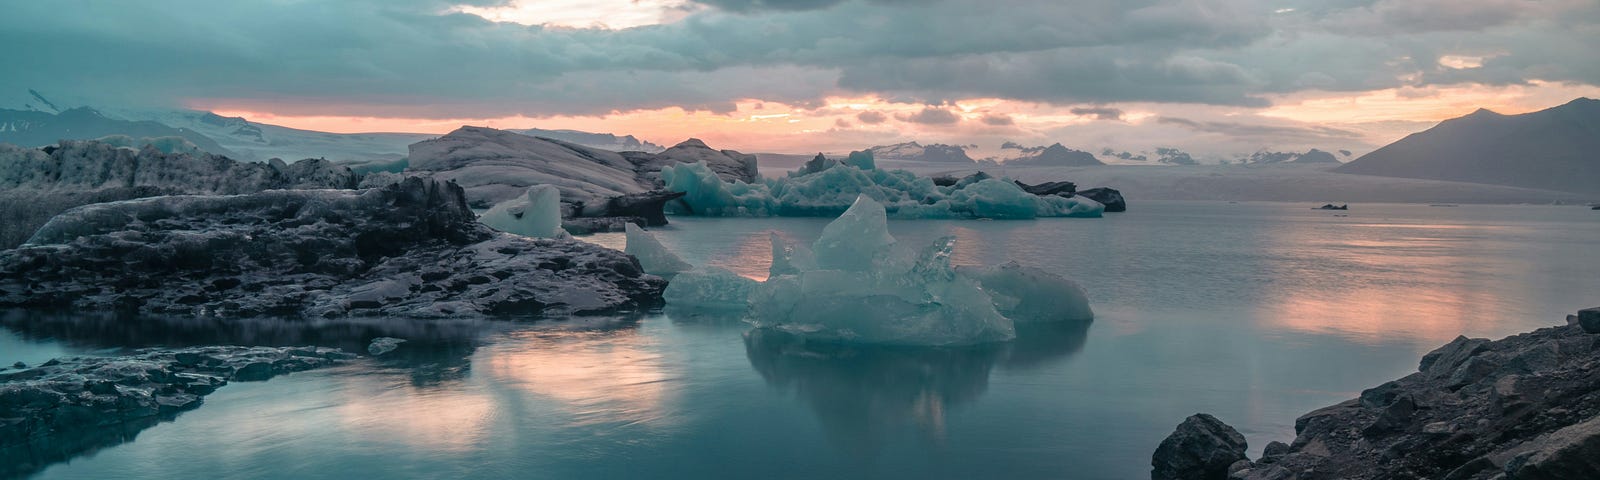 Iceberds and ice over a coastal landscape